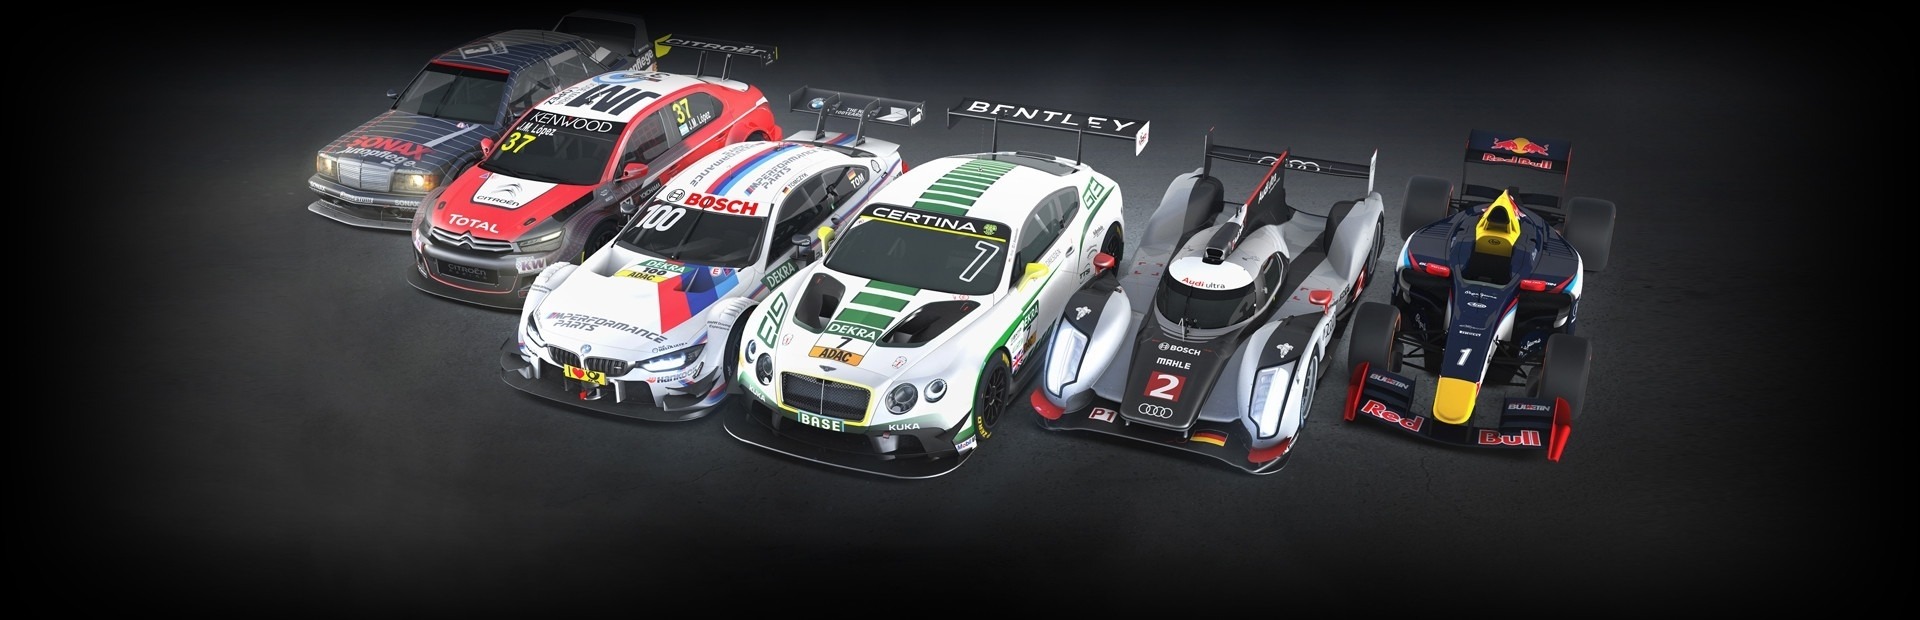 RaceRoom - ADAC GT Master 2014 Experience